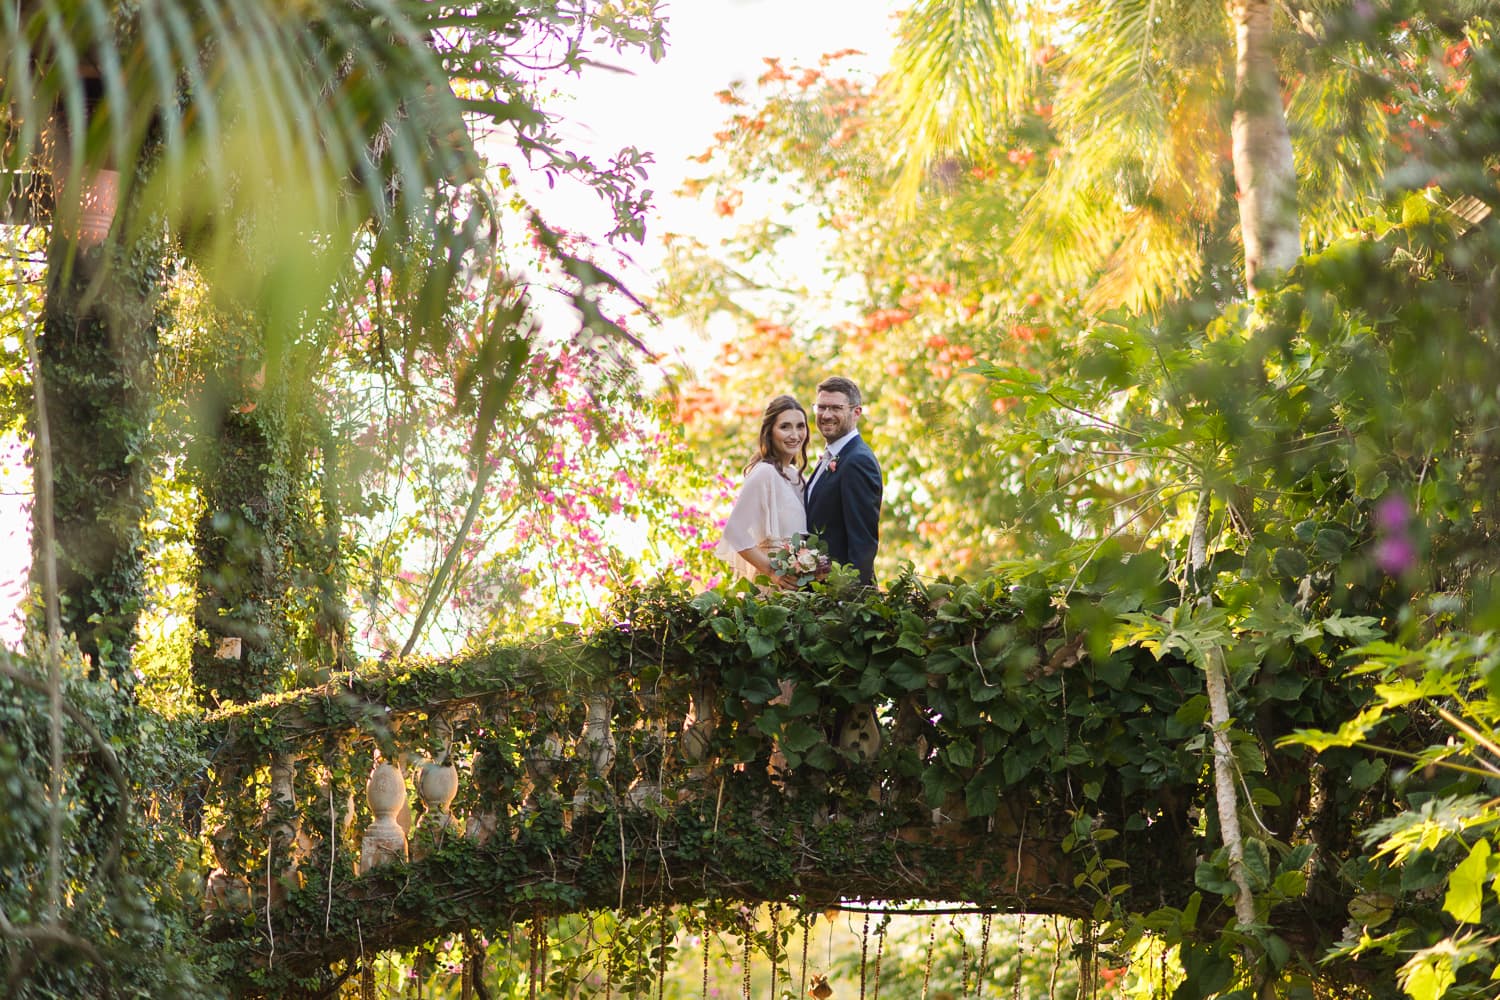 hacienda-siesta-alegre-photos-intimate-relaxed-candid-micro-wedding-photography-puerto-rico-048.jpg